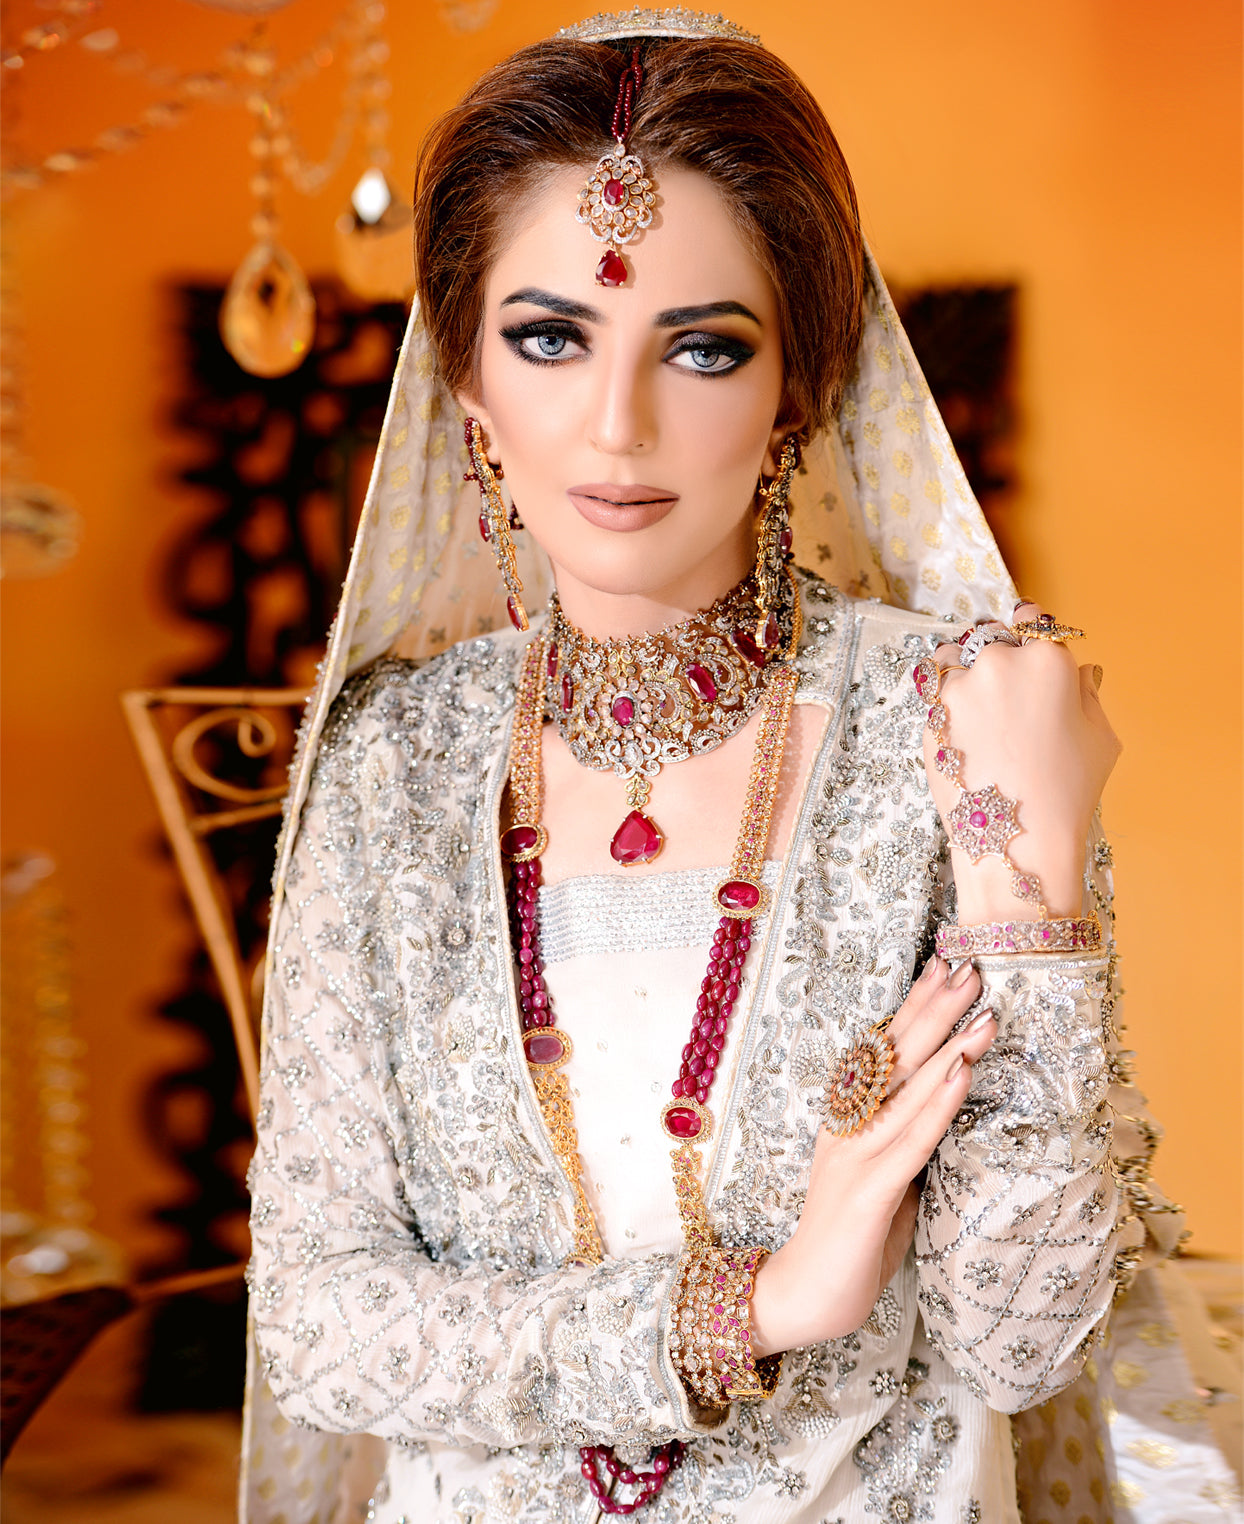 The Ferdoz - Antique Style Bridal Jewellery Set